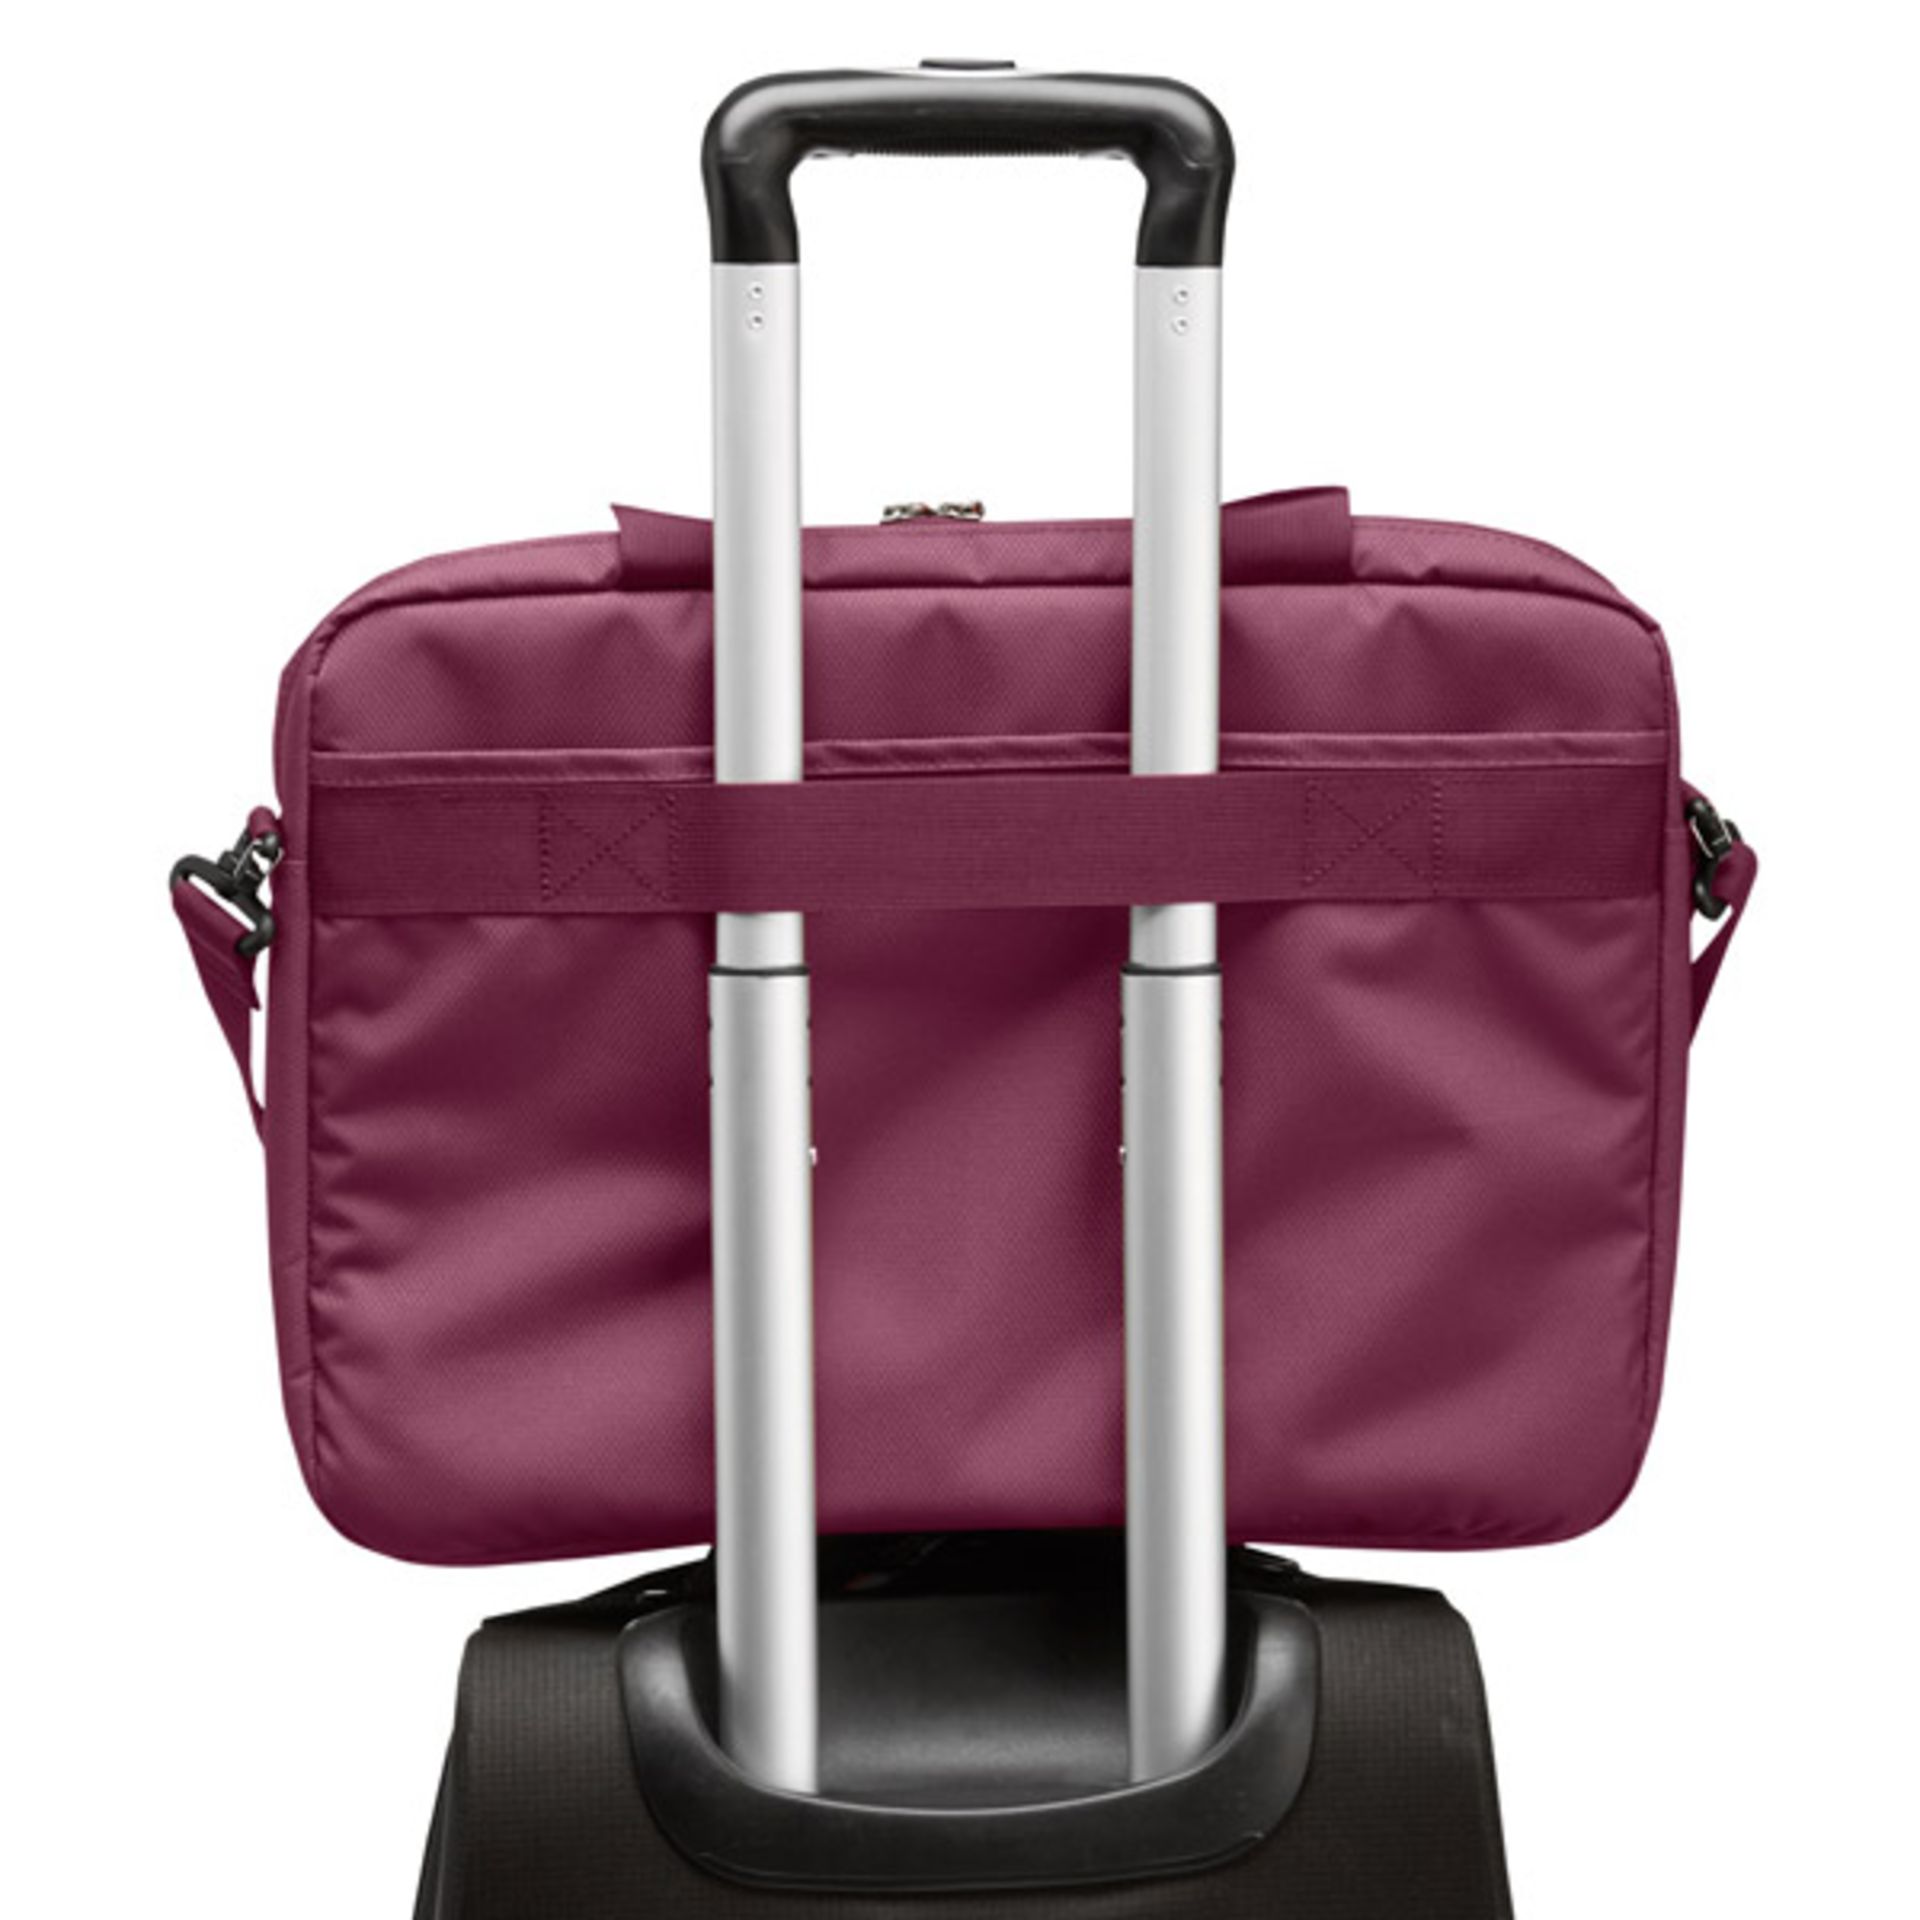 + VAT Brand New STM Swift Medium Shoulder Bag - RRP £42.99 Amazon Price £33.57 - For Laptop/Tablet - Image 2 of 3